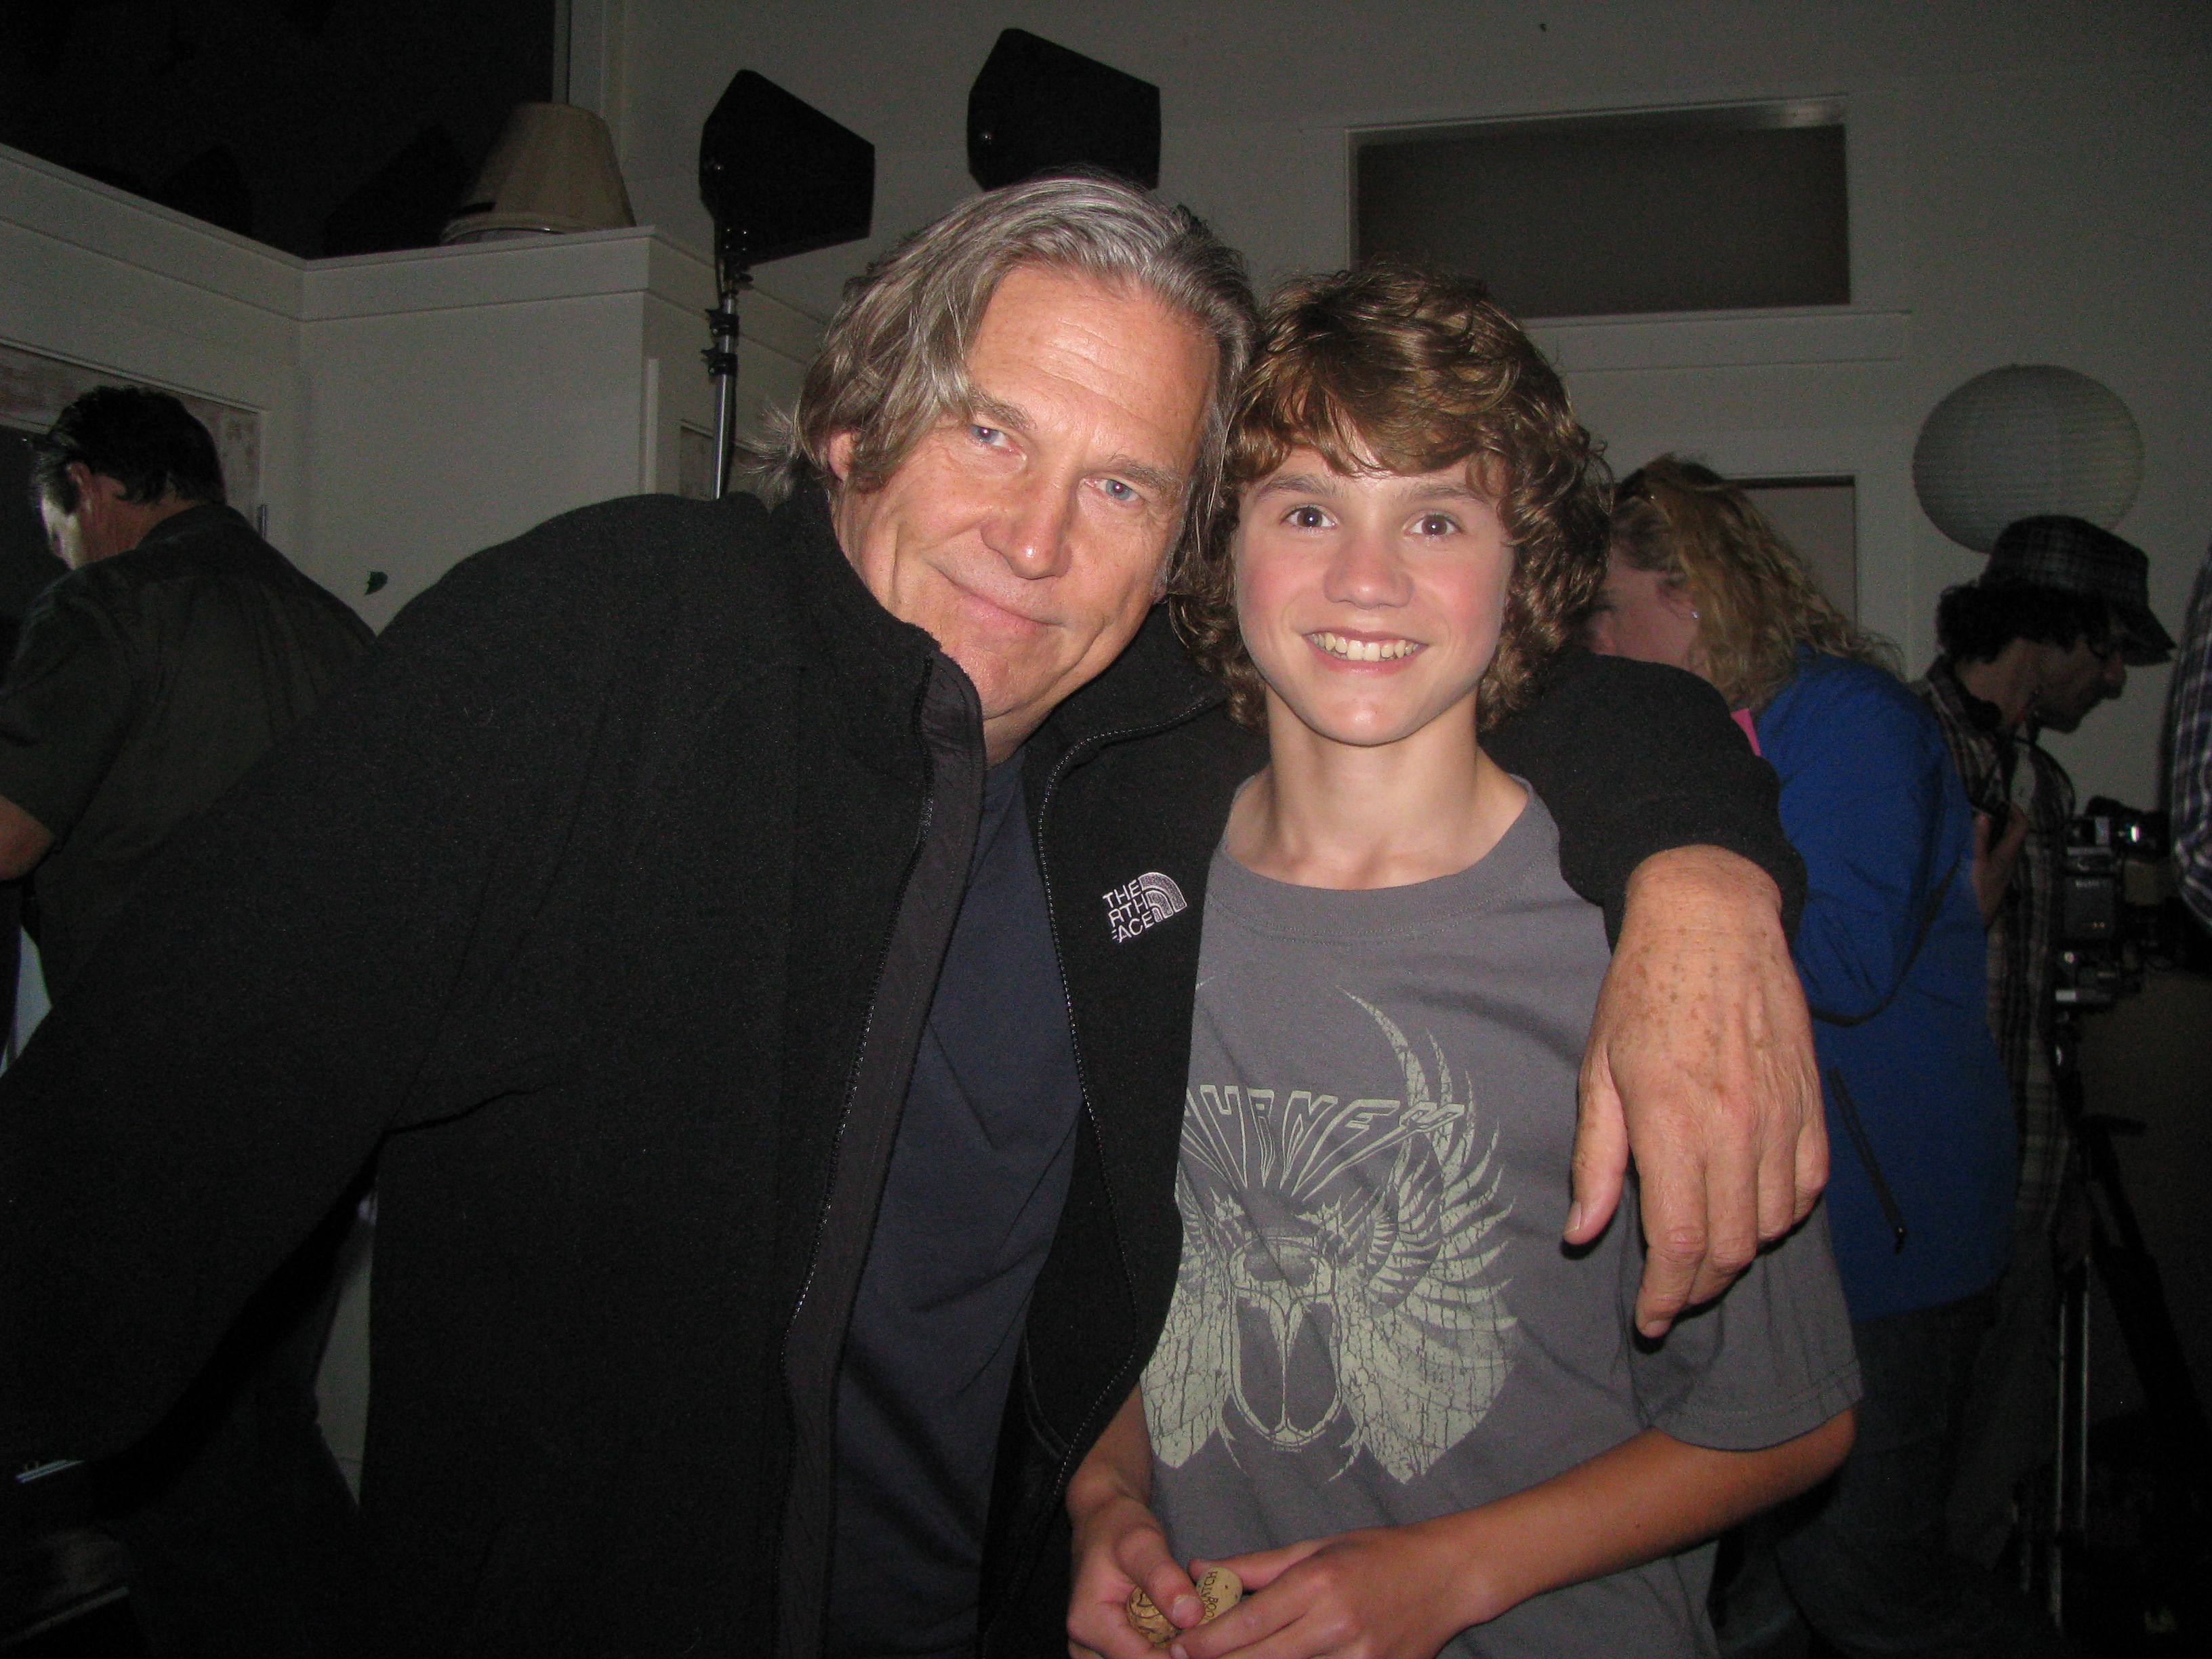 Owen with Jeff Bridges